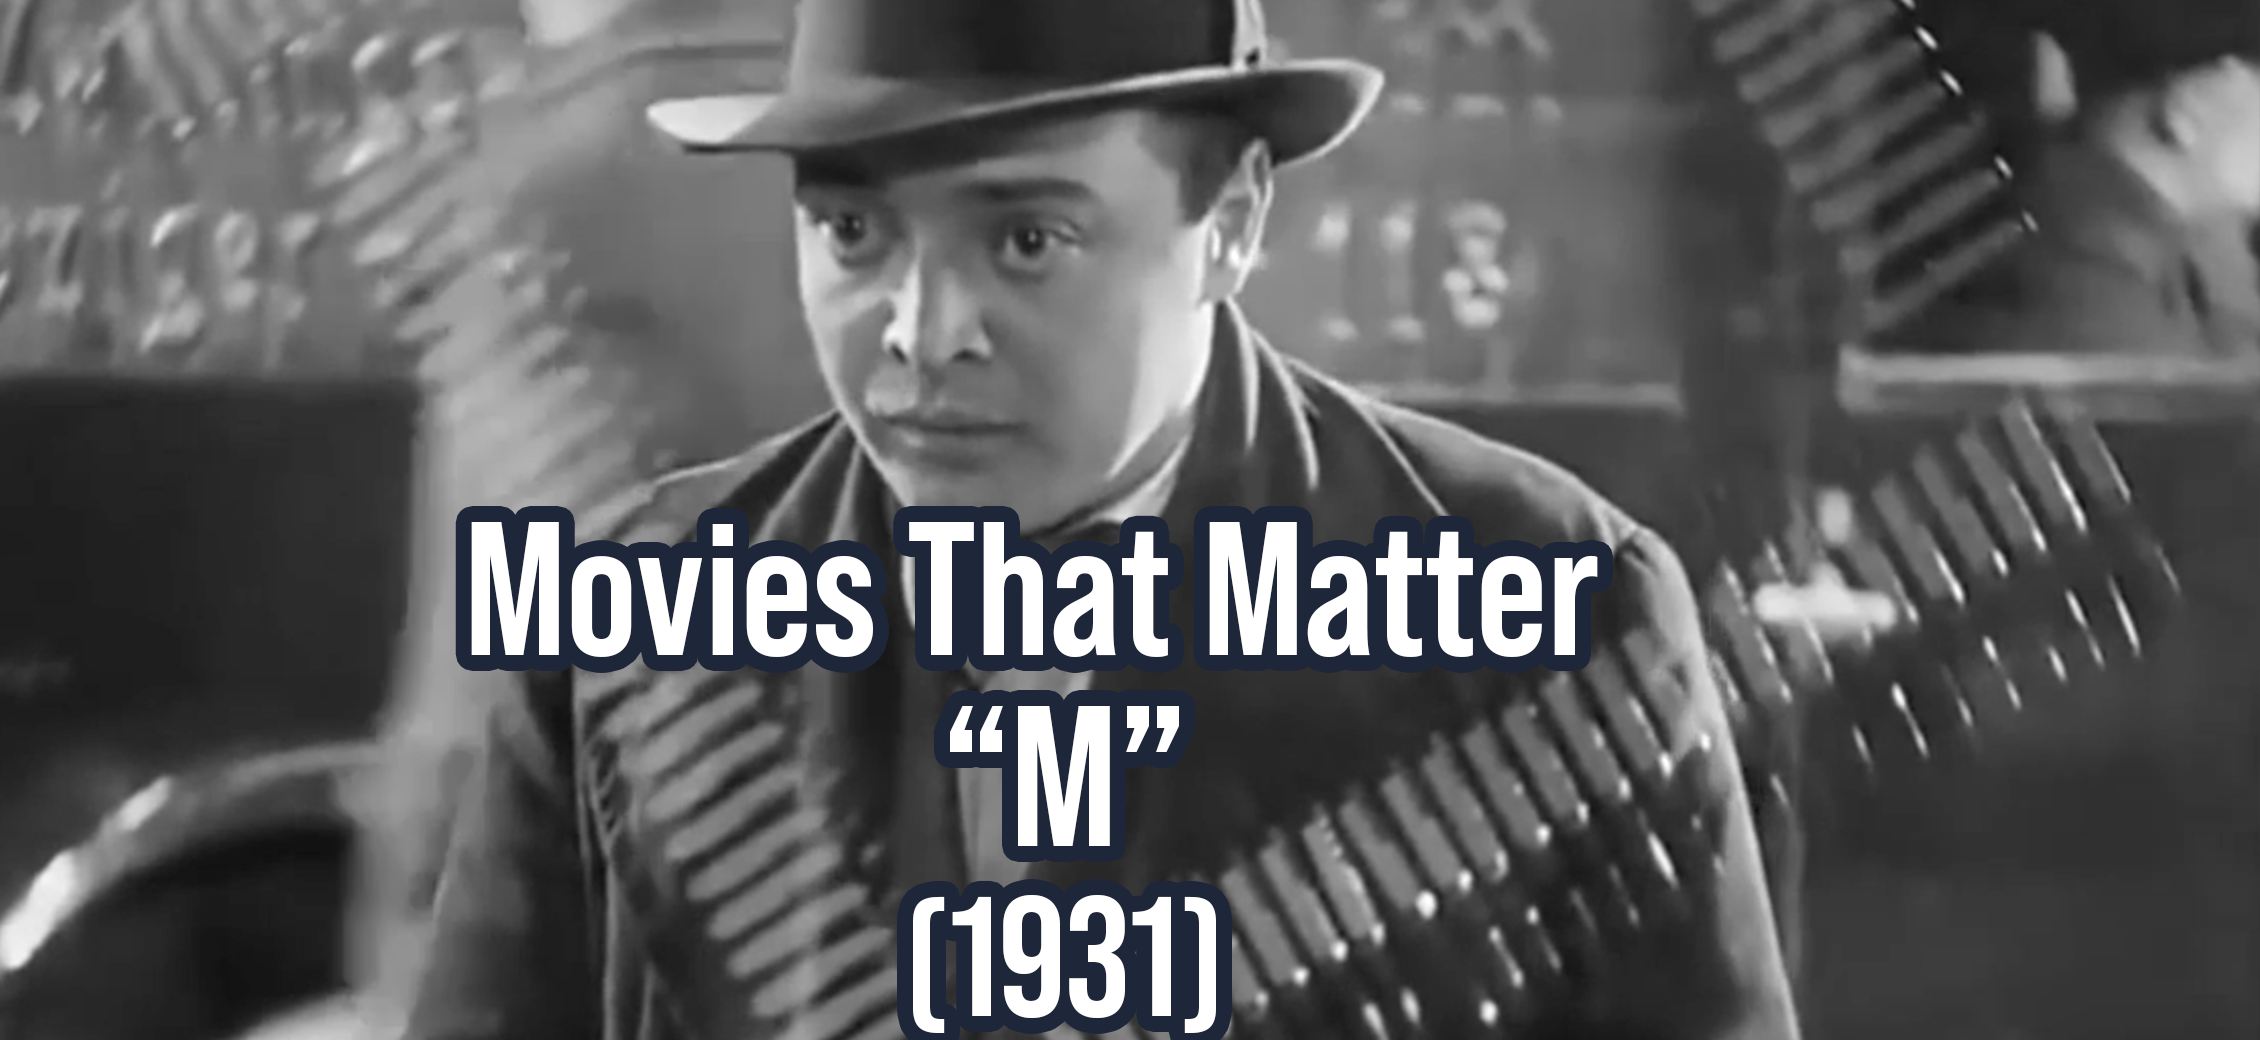 Movies That Matter: “M” (1931)